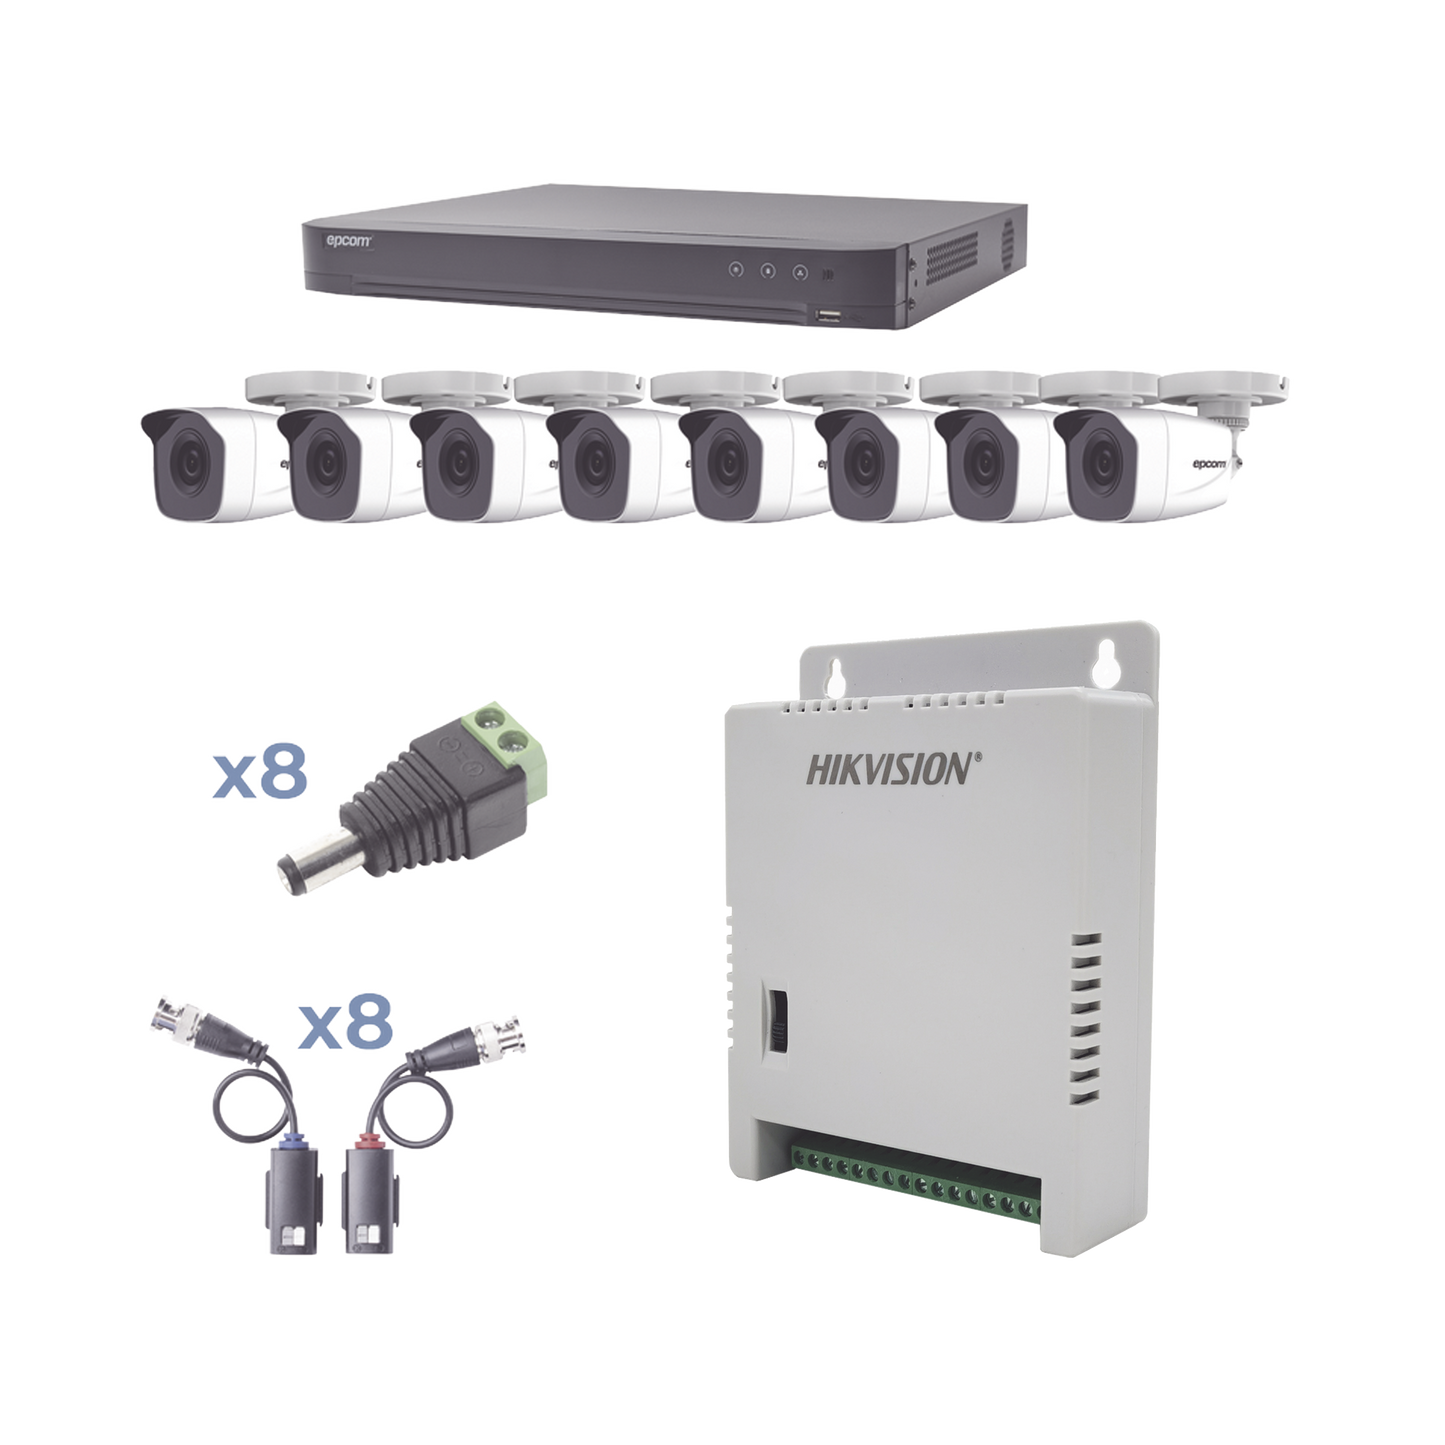 KIT TurboHD 1080p / DVR 8 Canales / 8 Cámaras Bala (exterior 2.8 mm) / Transceptores / Conectores / Fuente de Poder Profesional hasta 15 Vcc para Larga Distancias